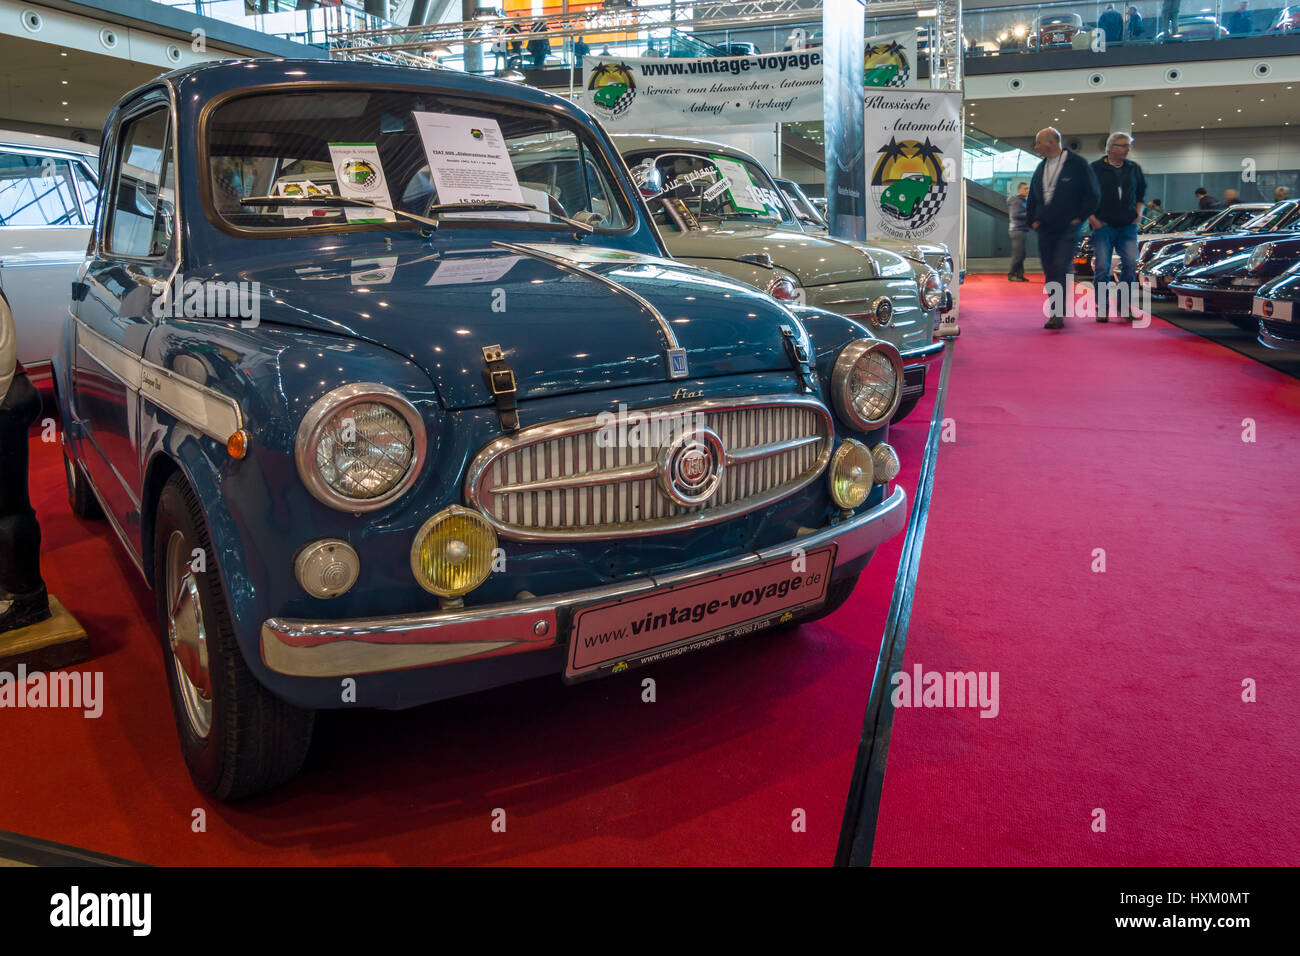 STUTTGART, GERMANY - MARCH 02, 2017: City car Fiat 600 'Elaborazione Nardi', 1962. Europe's greatest classic car exhibition 'RETRO CLASSICS' Stock Photo